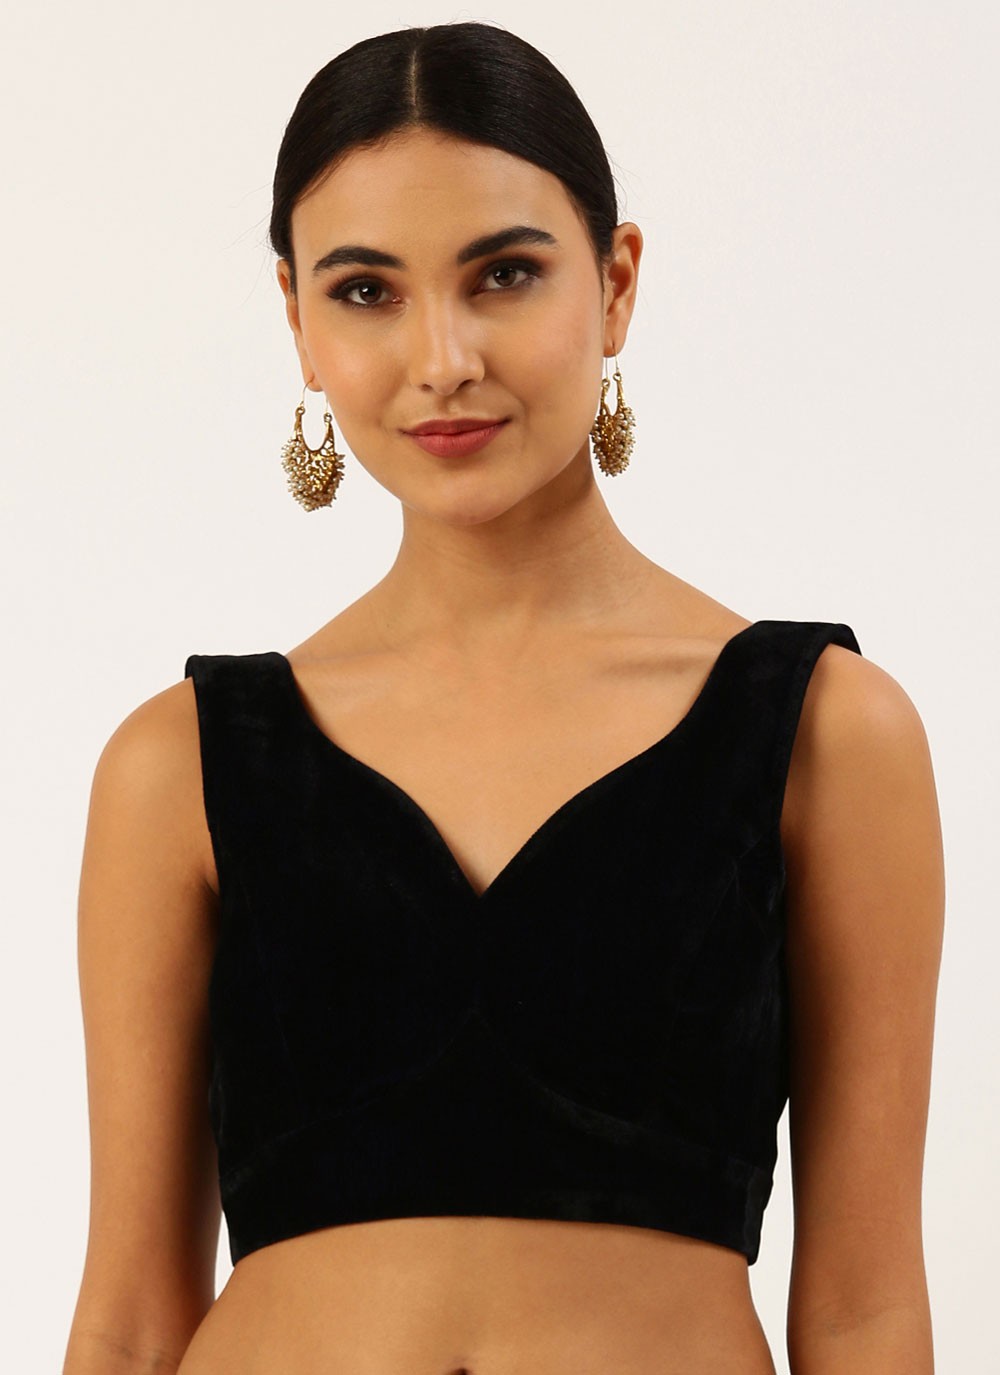 Designer Sari Sleevless Velvet Blouse Bollywood Women Crop Top Ethnic Choli